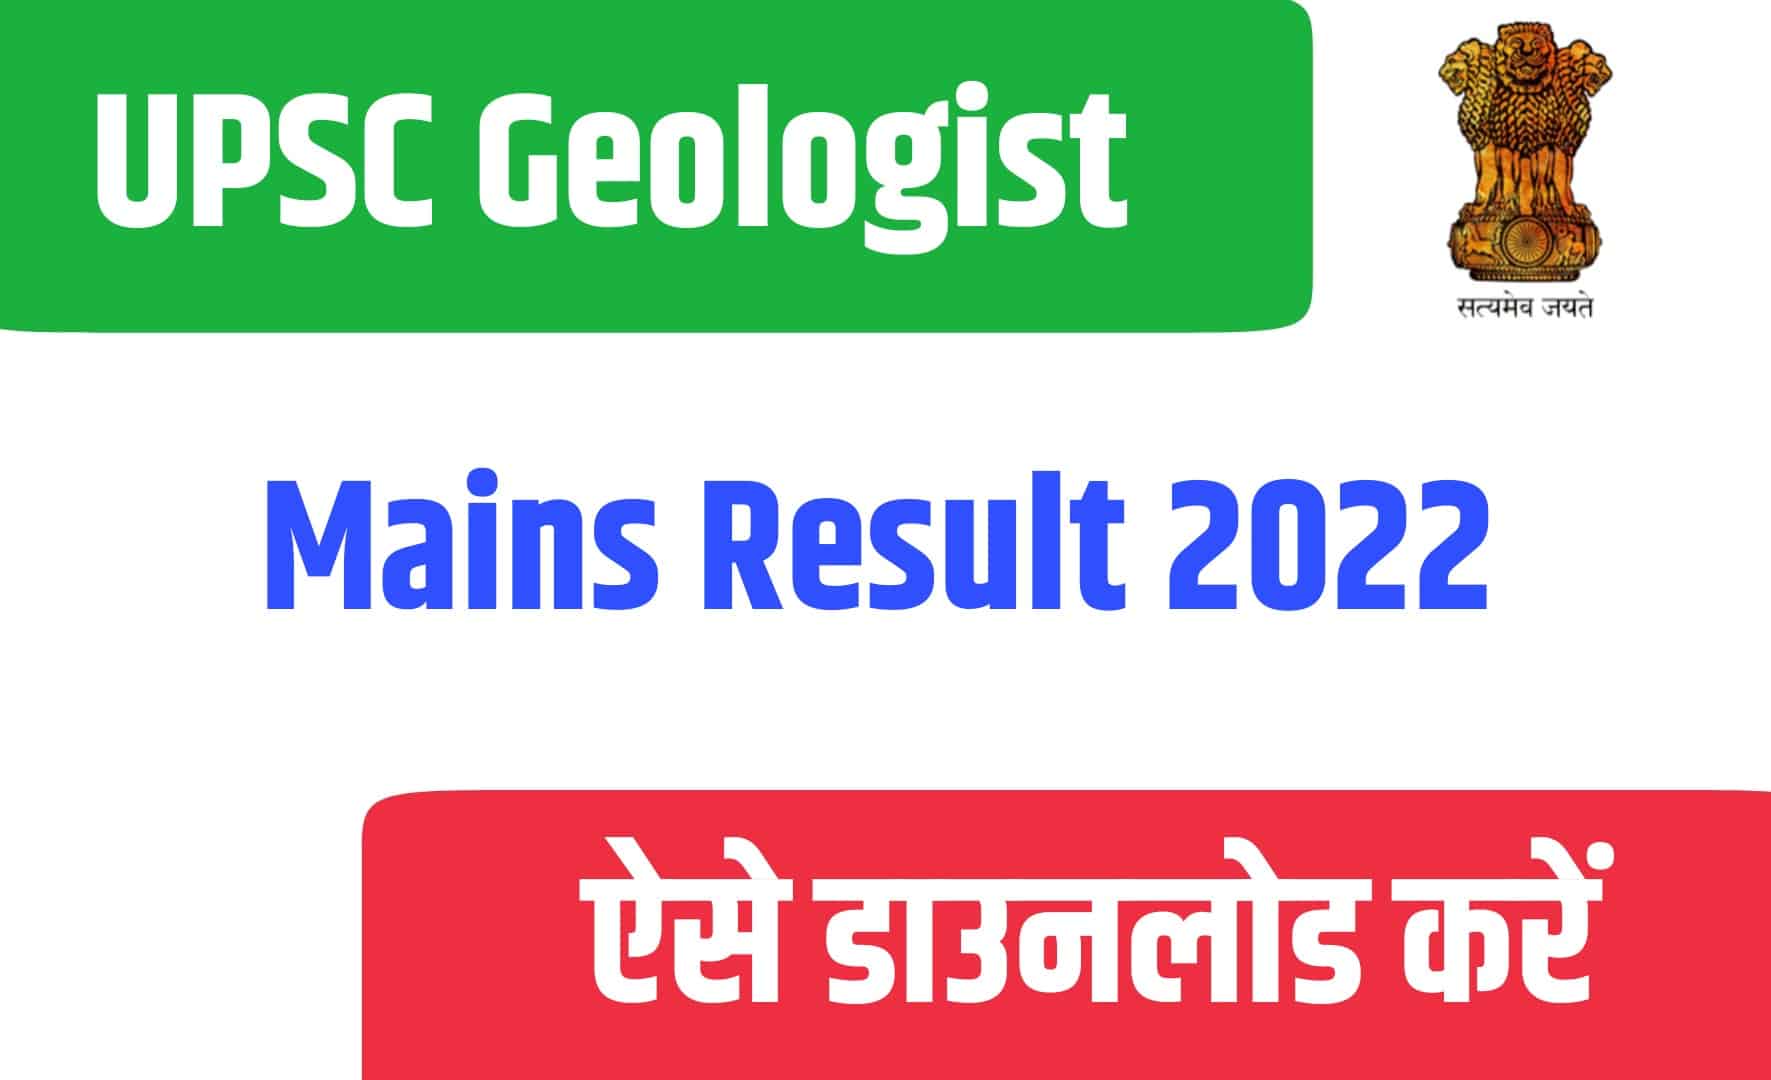 UPSC Geologist Mains Result 2022